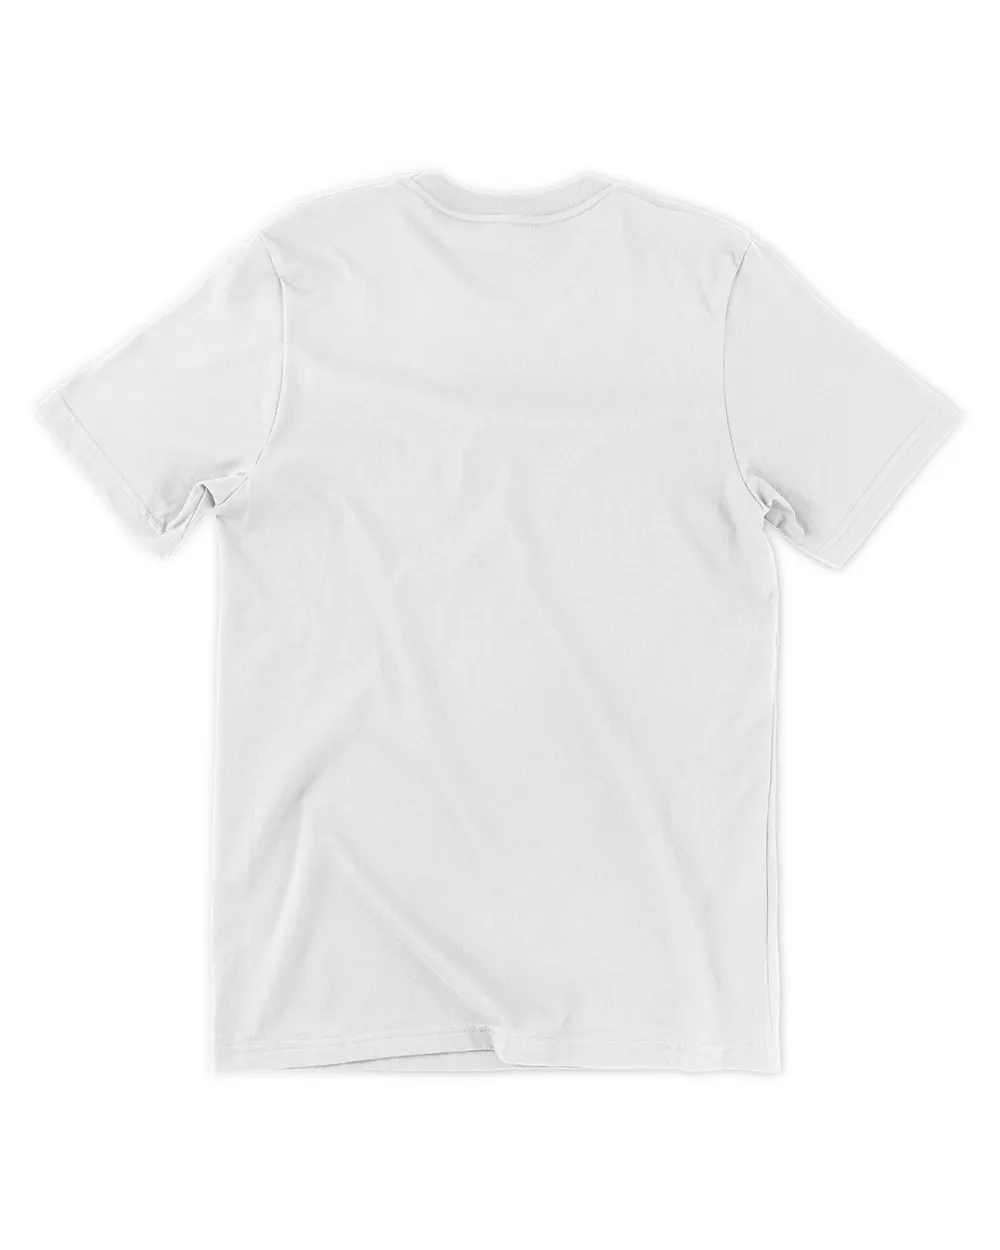 Running Up That Hill Max Mayfield T-Shirt Stranger Things Season 4 Shirt